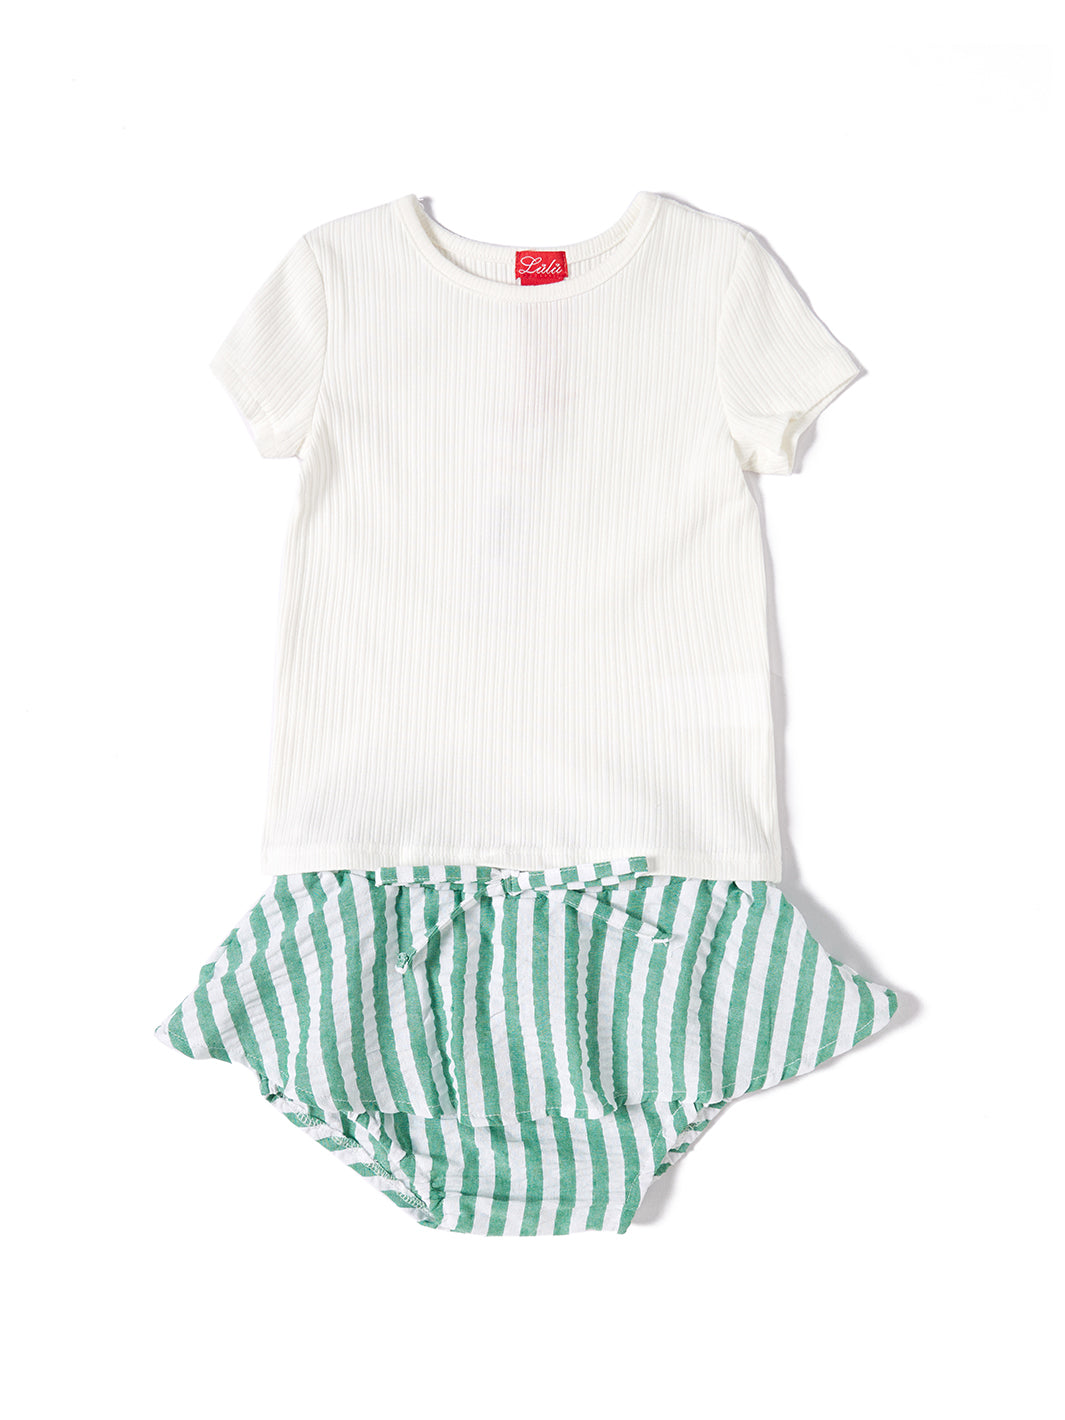 Baby Stripe Set - White/Green